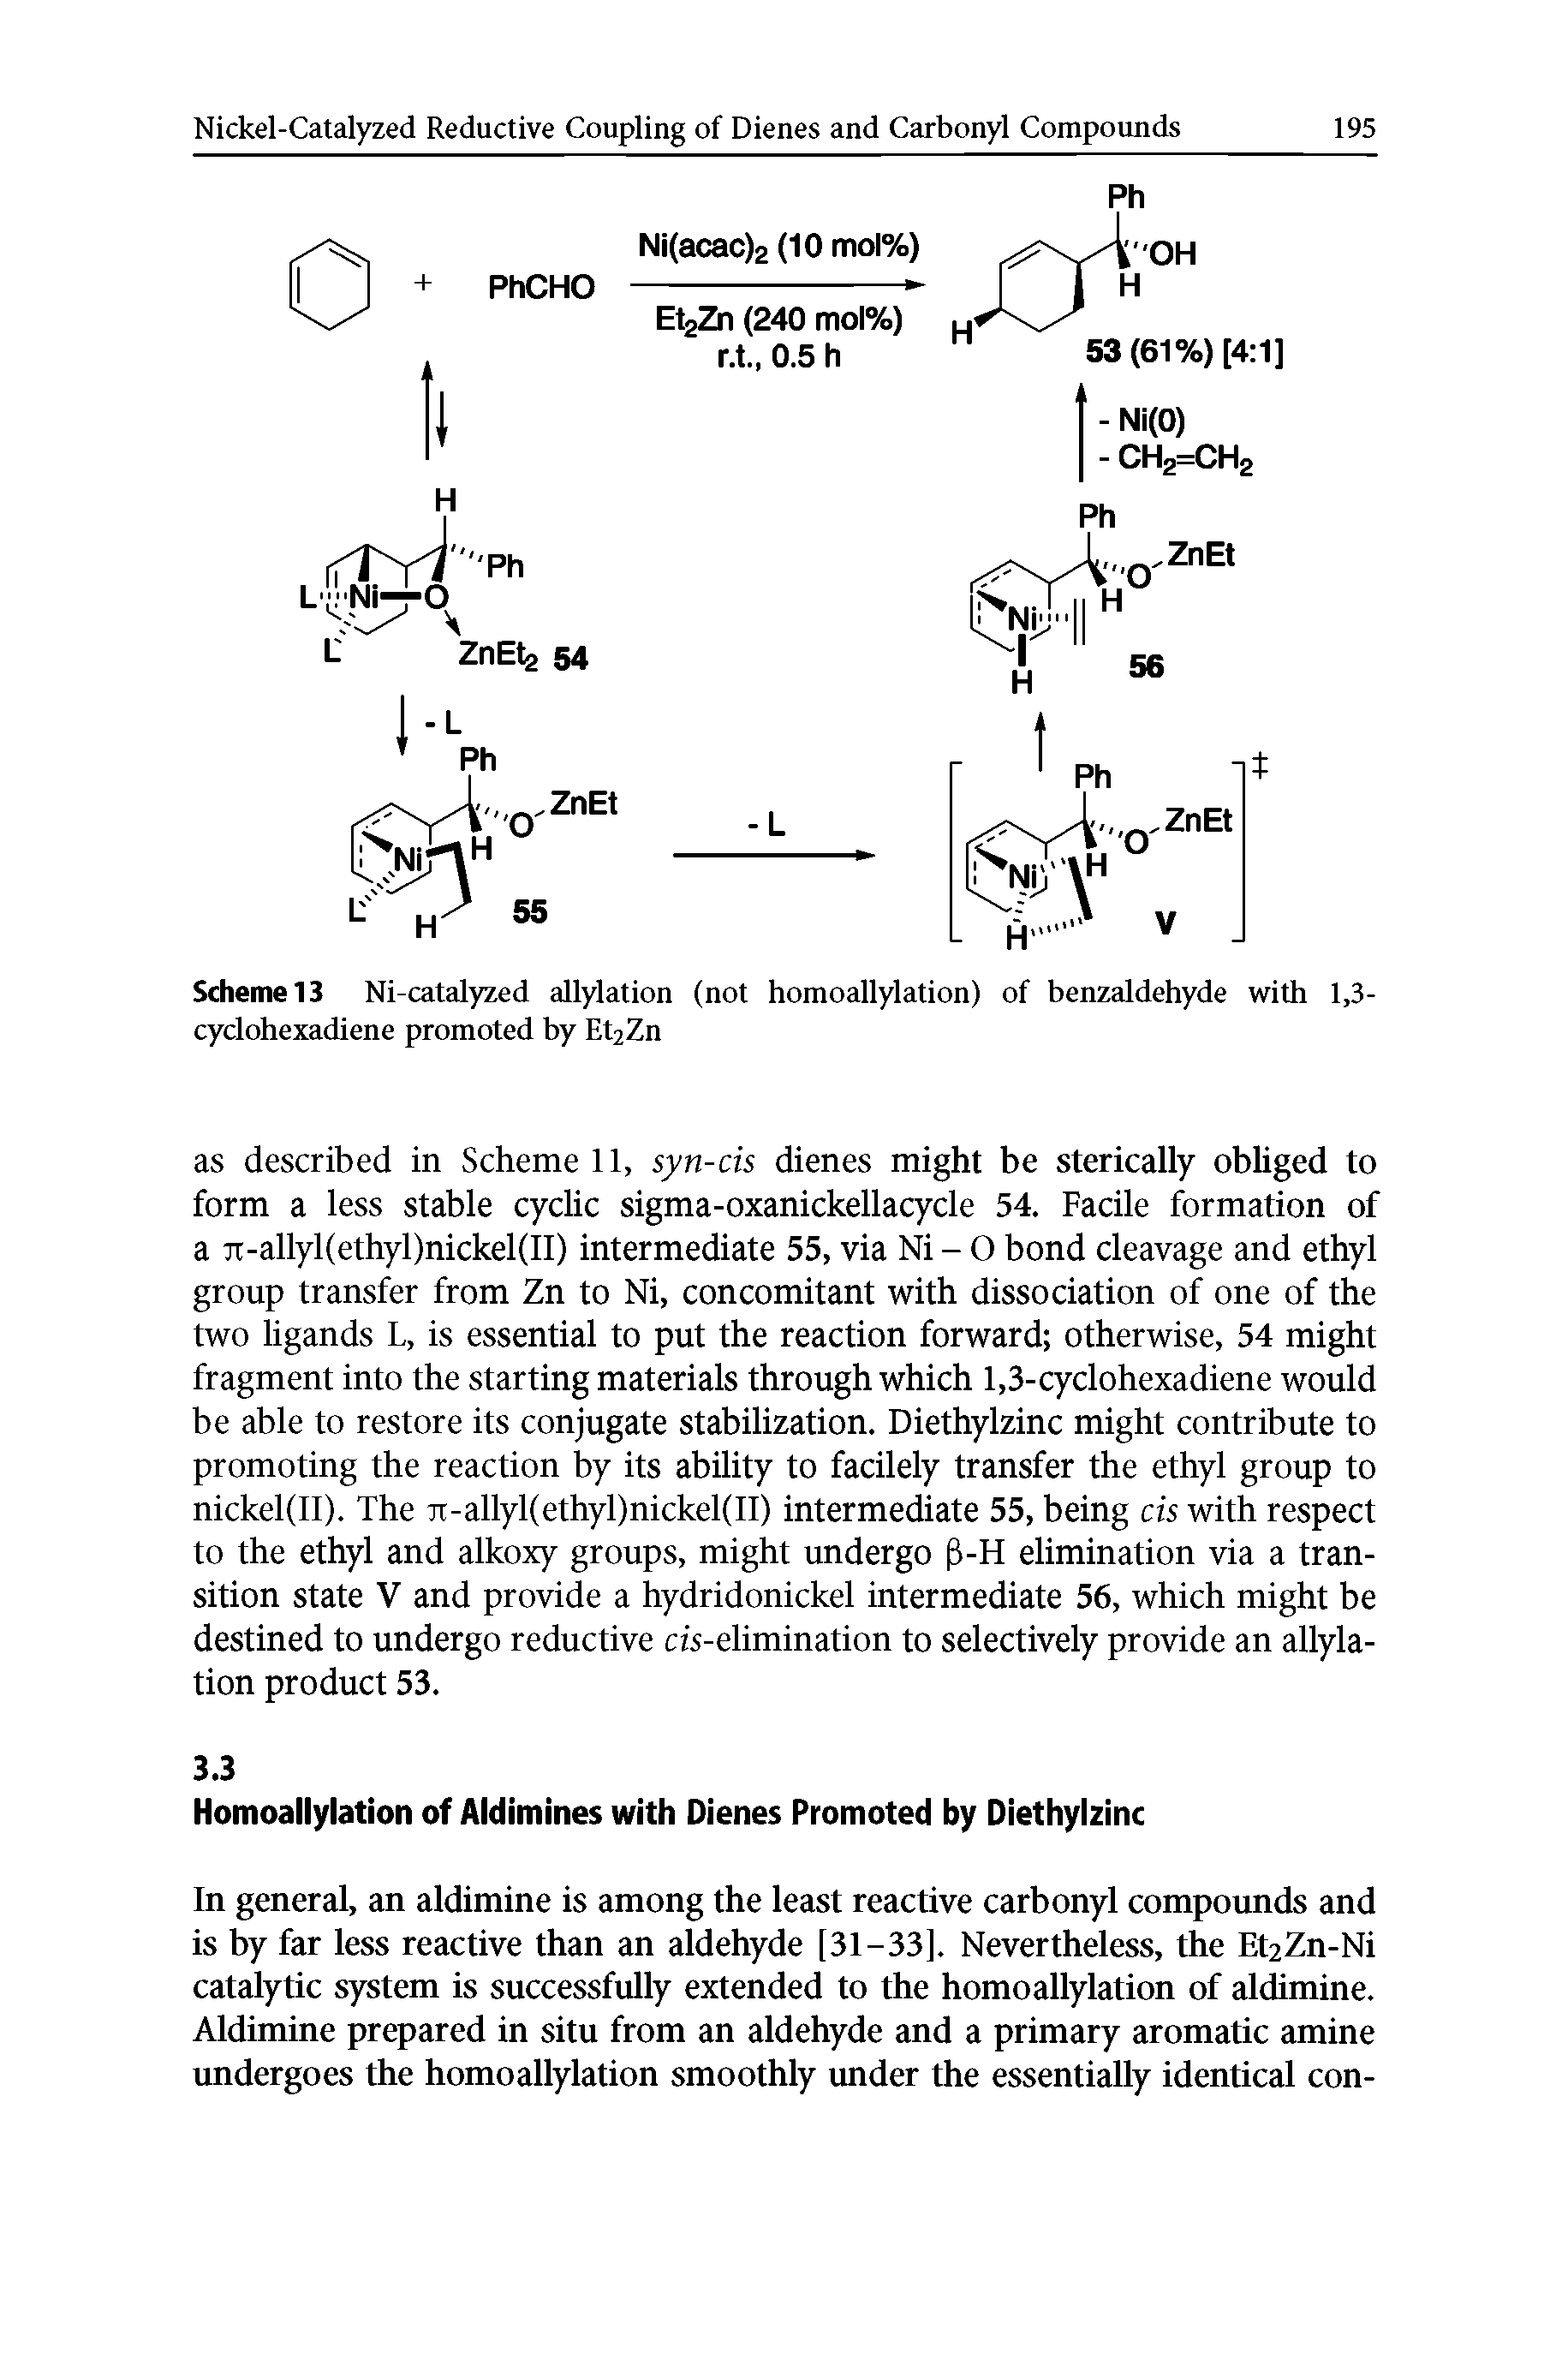 Scheme 13 Ni-catalyzed allylation (not homoallylation) of benzaldehyde with 1,3-cyclohexadiene promoted by Et2Zn...